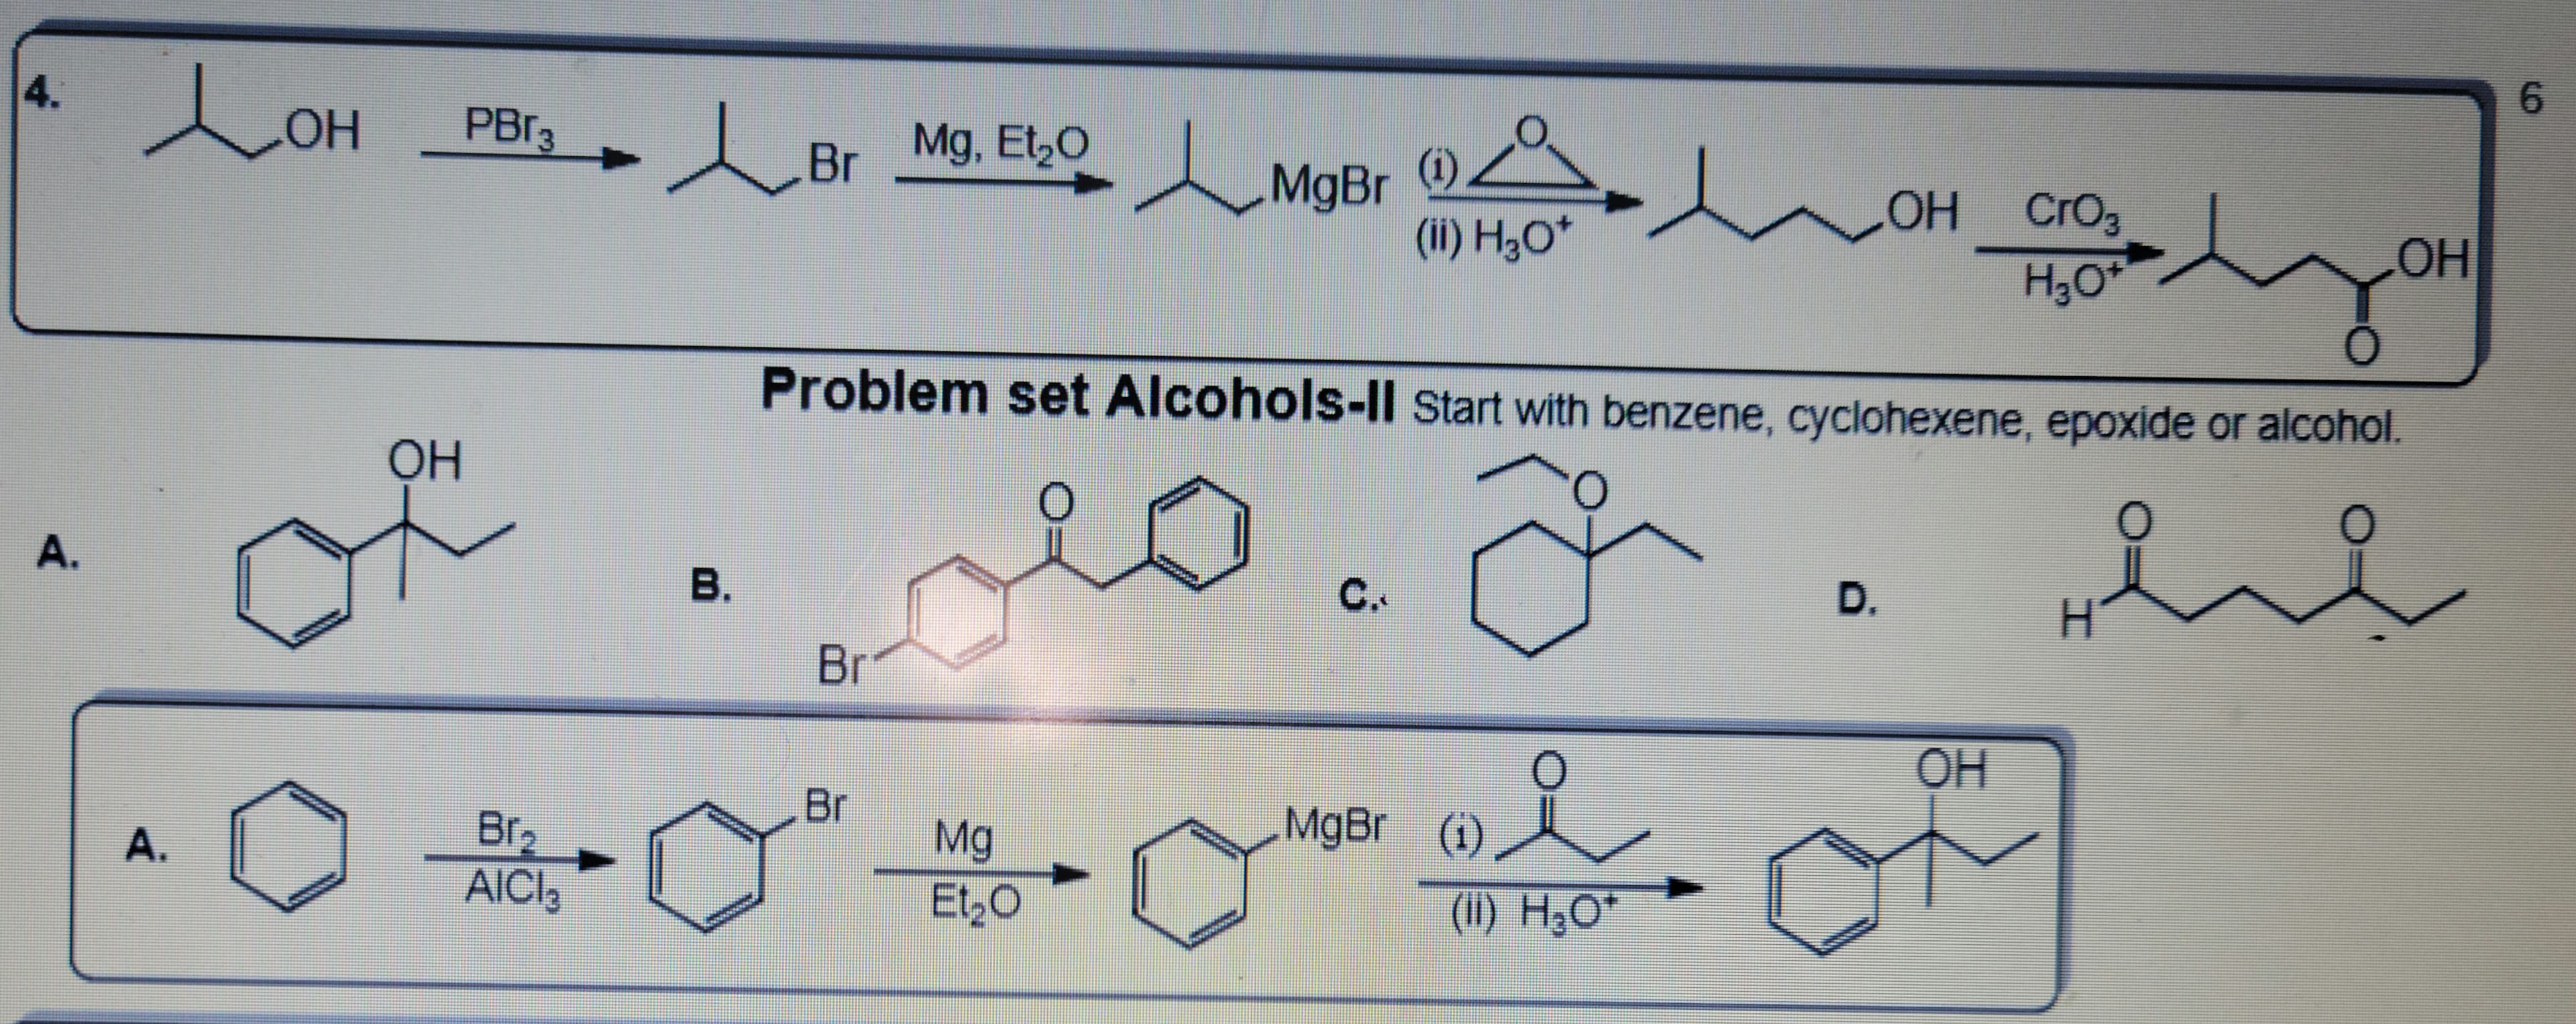 4.
A.
Лон
A.
OH
PBr3
l
Br₂
AICI₂
B.
Br
Mg, Et₂O
Br
Li MgBr
Br
Mg
-02-0
Et₂O
(0) Z
(ii) H₂O*
C.
Problem set Alcohols-II Start with benzene, cyclohexene, epoxide or alcohol.
요
MgBr (1)
(1)
~
(II) H₂O*
OH CrO3
H₂O
D.
OH
/
OH
شدند
H
6